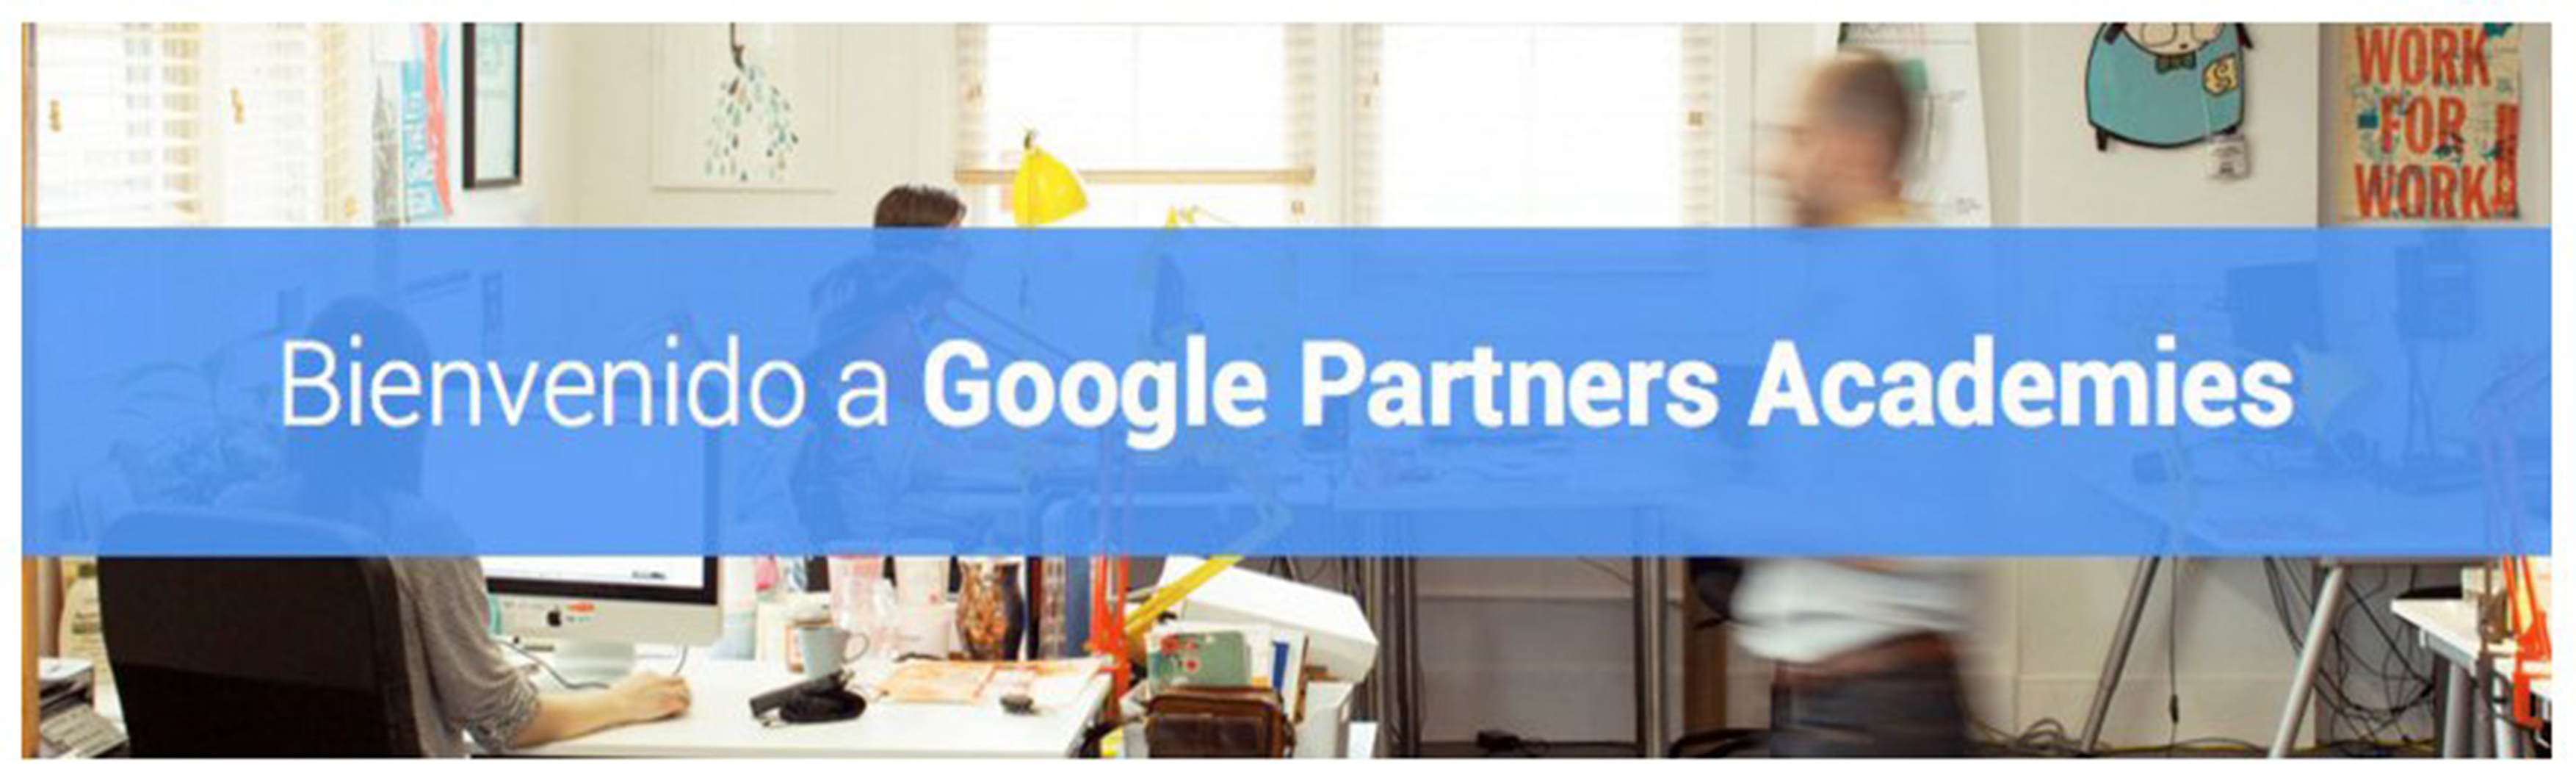 Google Partners Academy